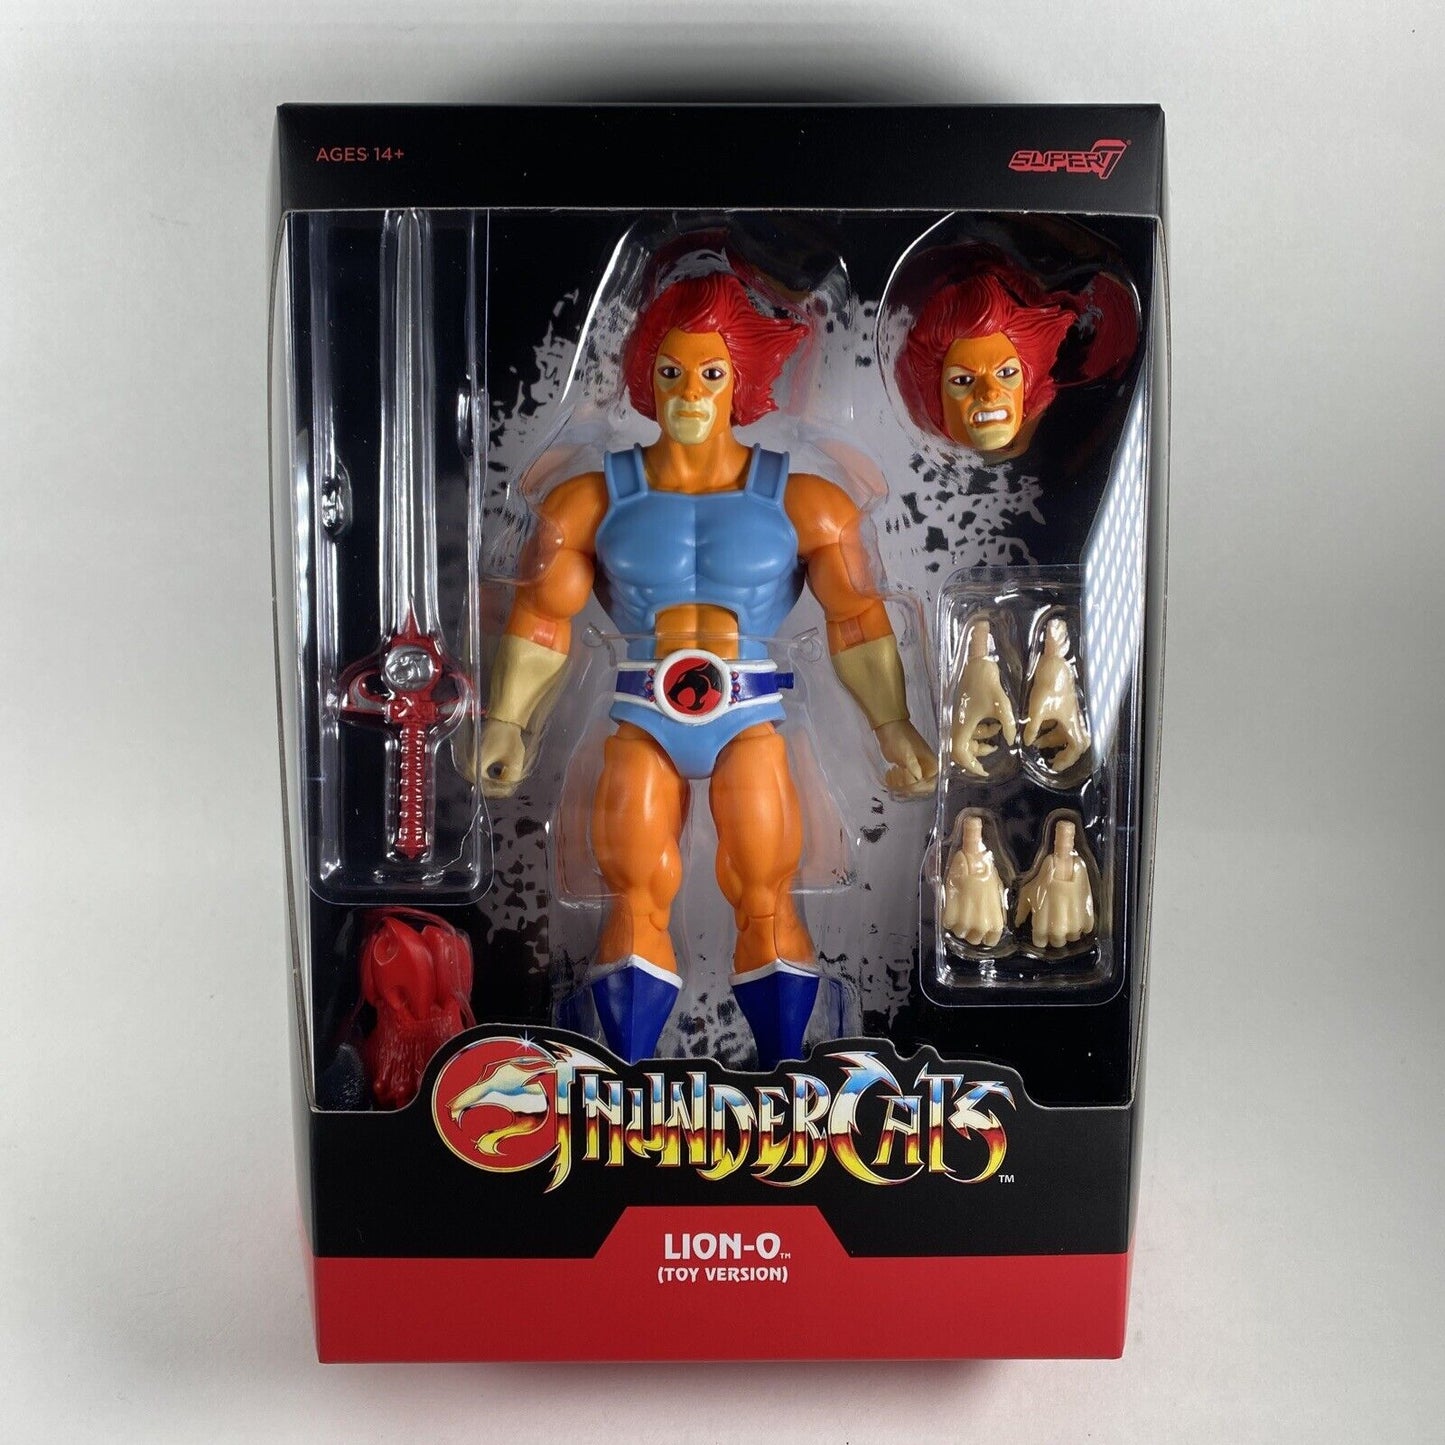 Super7 Ultimates Thundercats Lion-O (Toy Version)